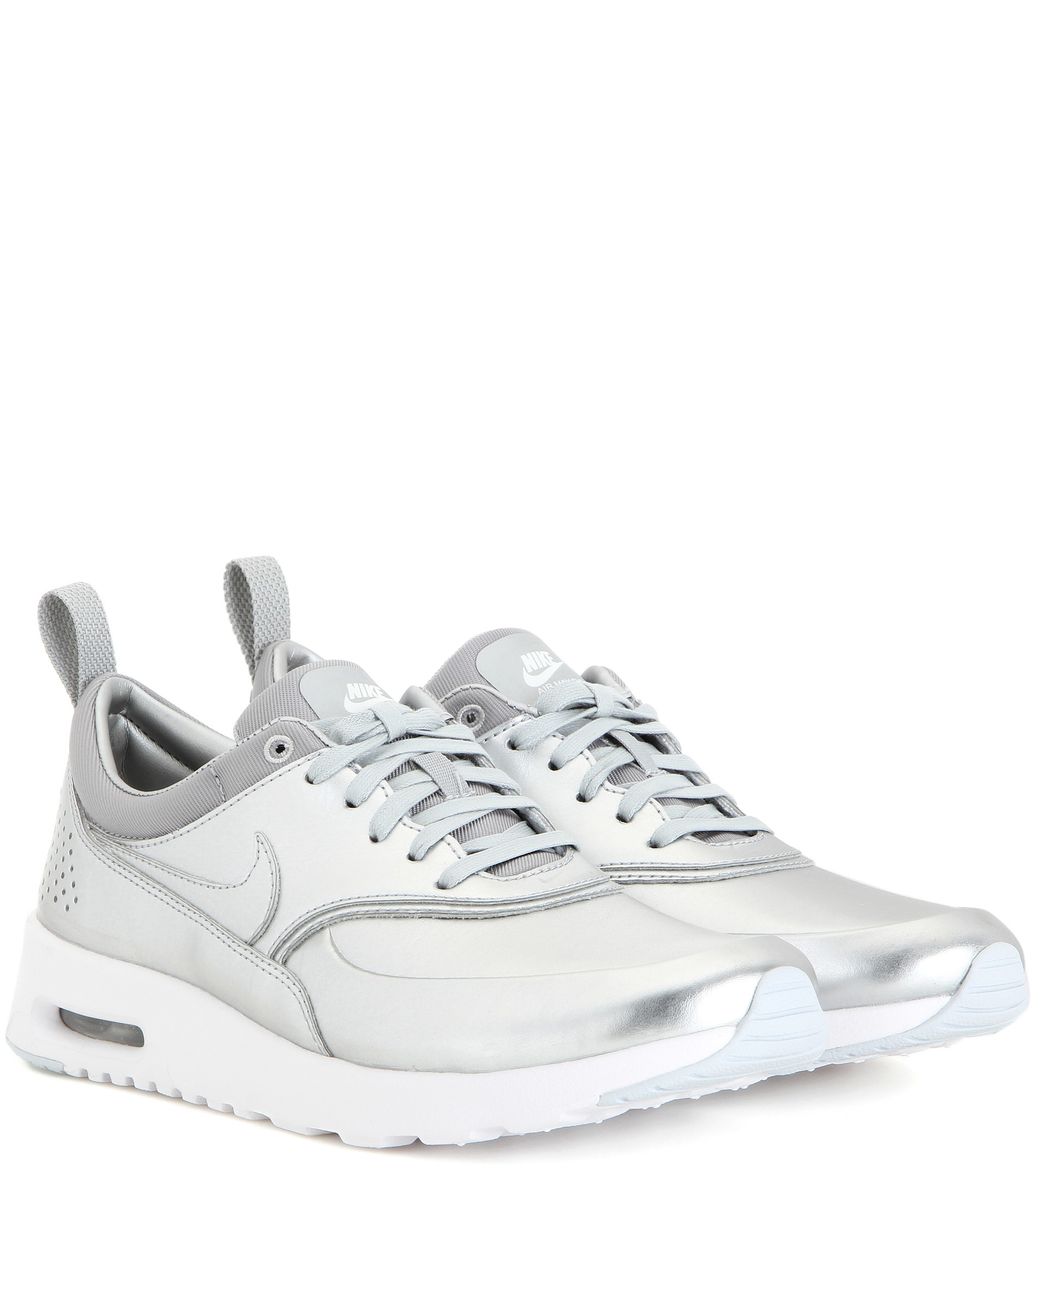 Nike Air Max Thea Metallic Silver Sneakers | Lyst